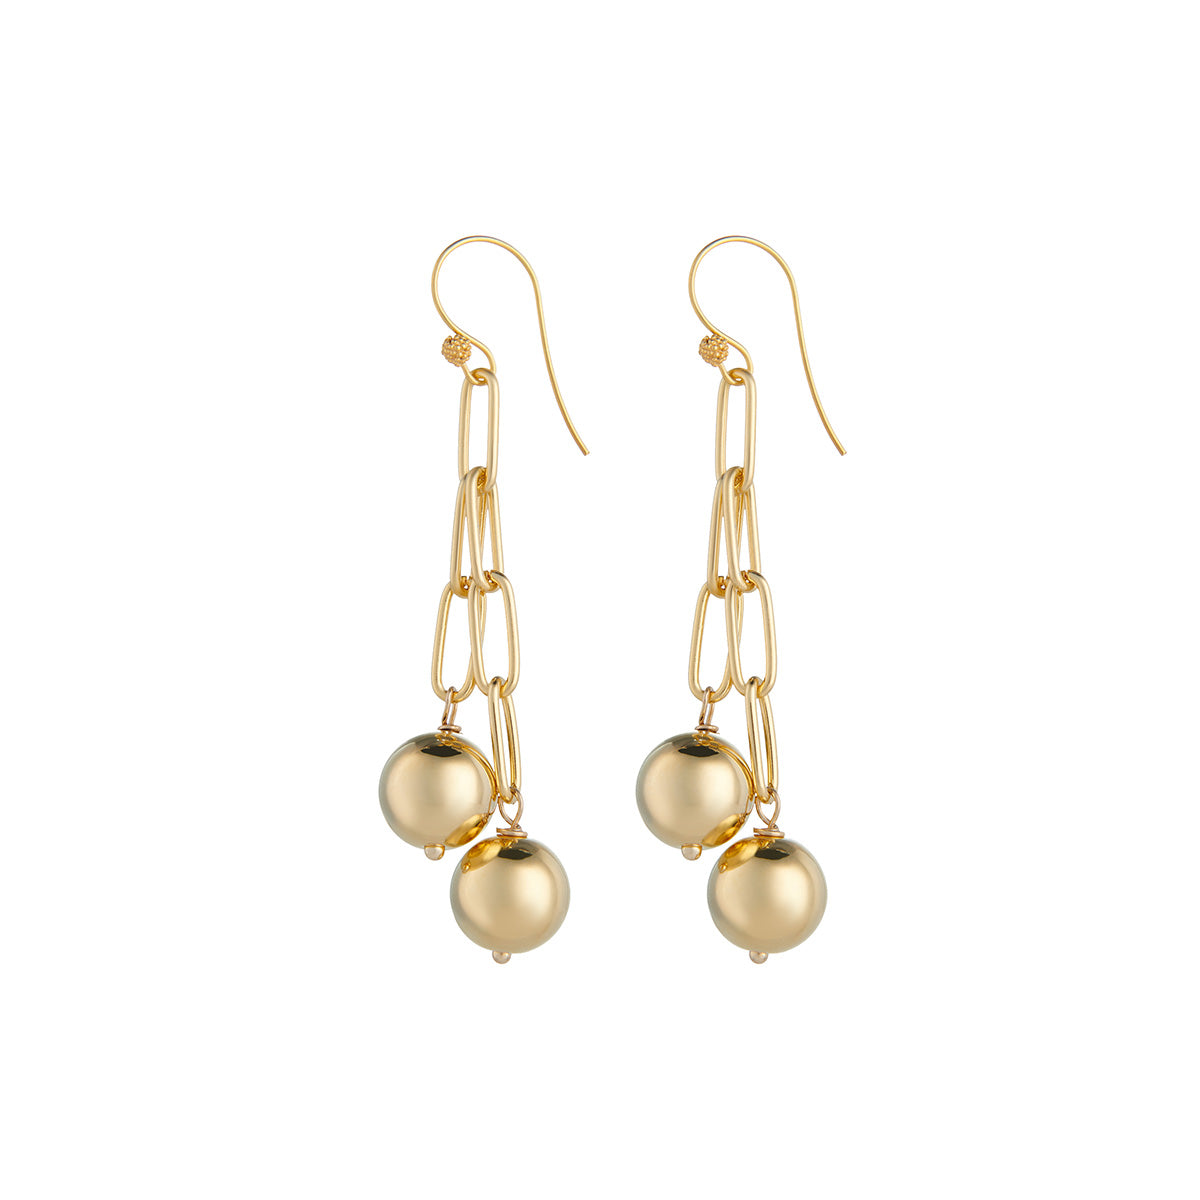 Vivien Walsh, Gold Ball Link Earrings